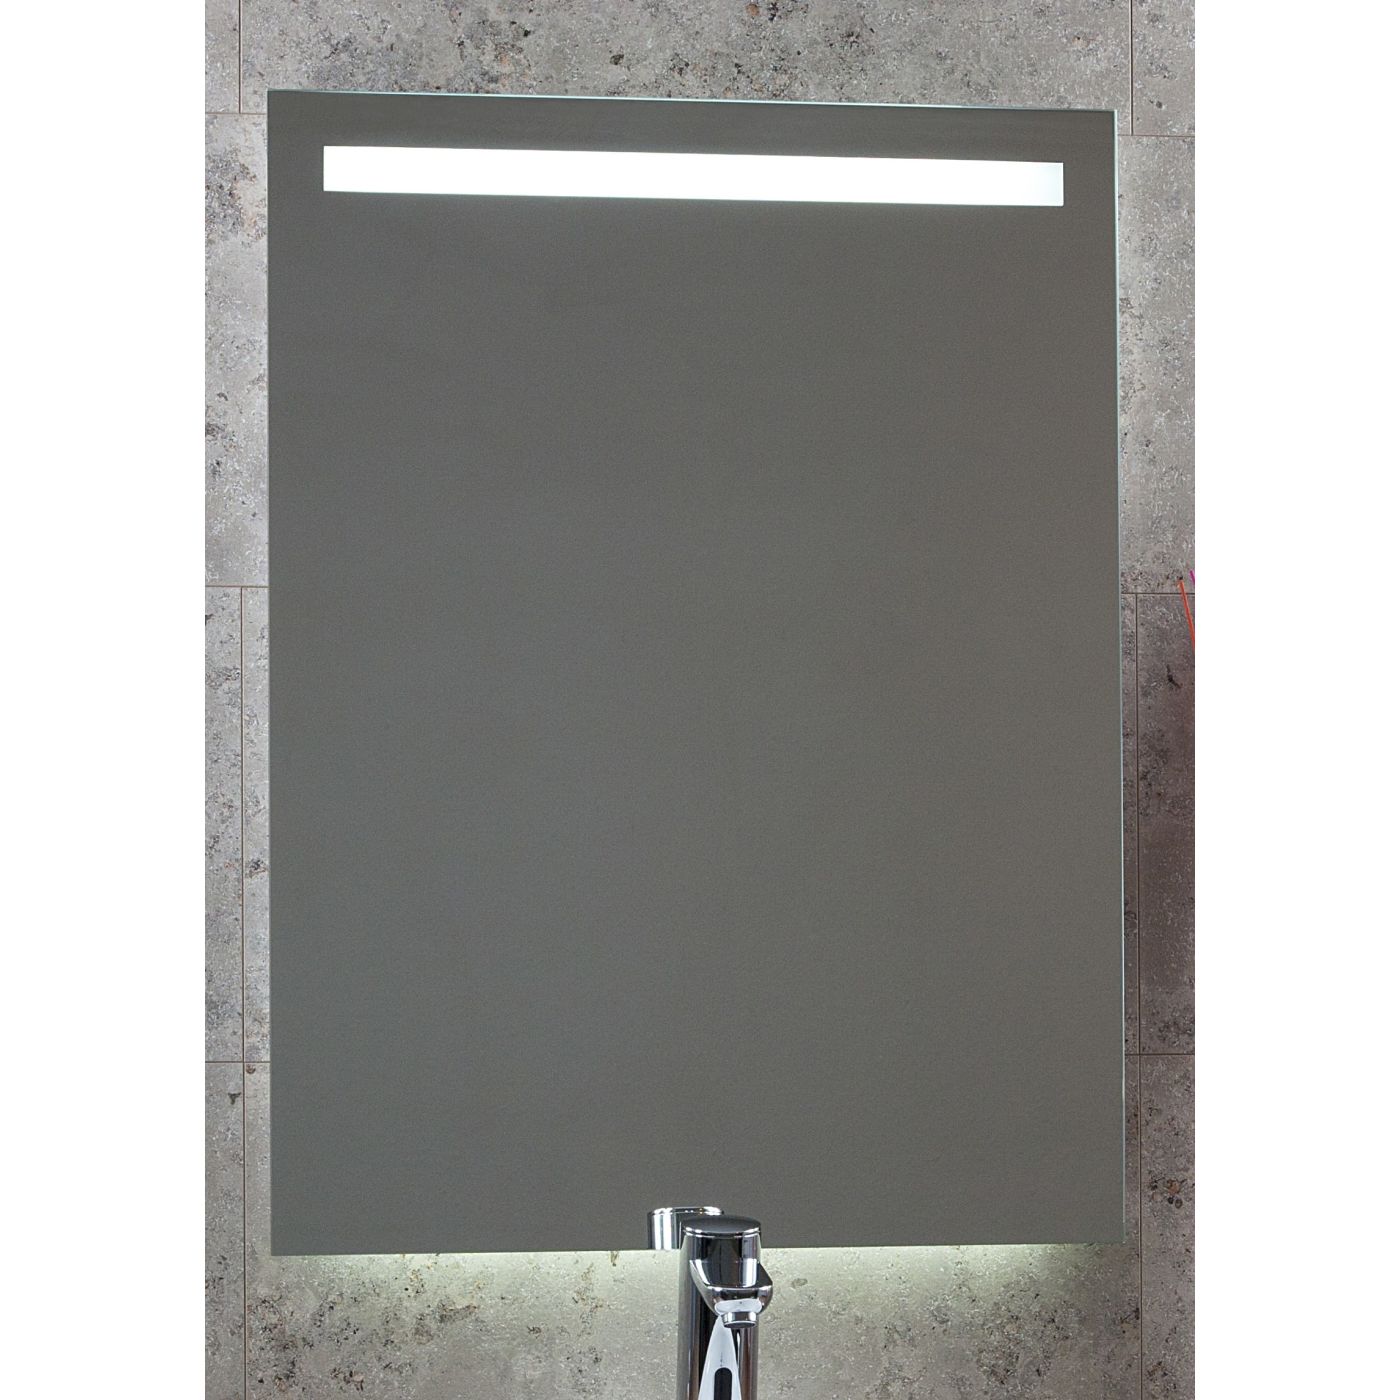 Novara Led Line spiegel rechthoek met led verlichting 80x80x3 cm + spiegel verwarming